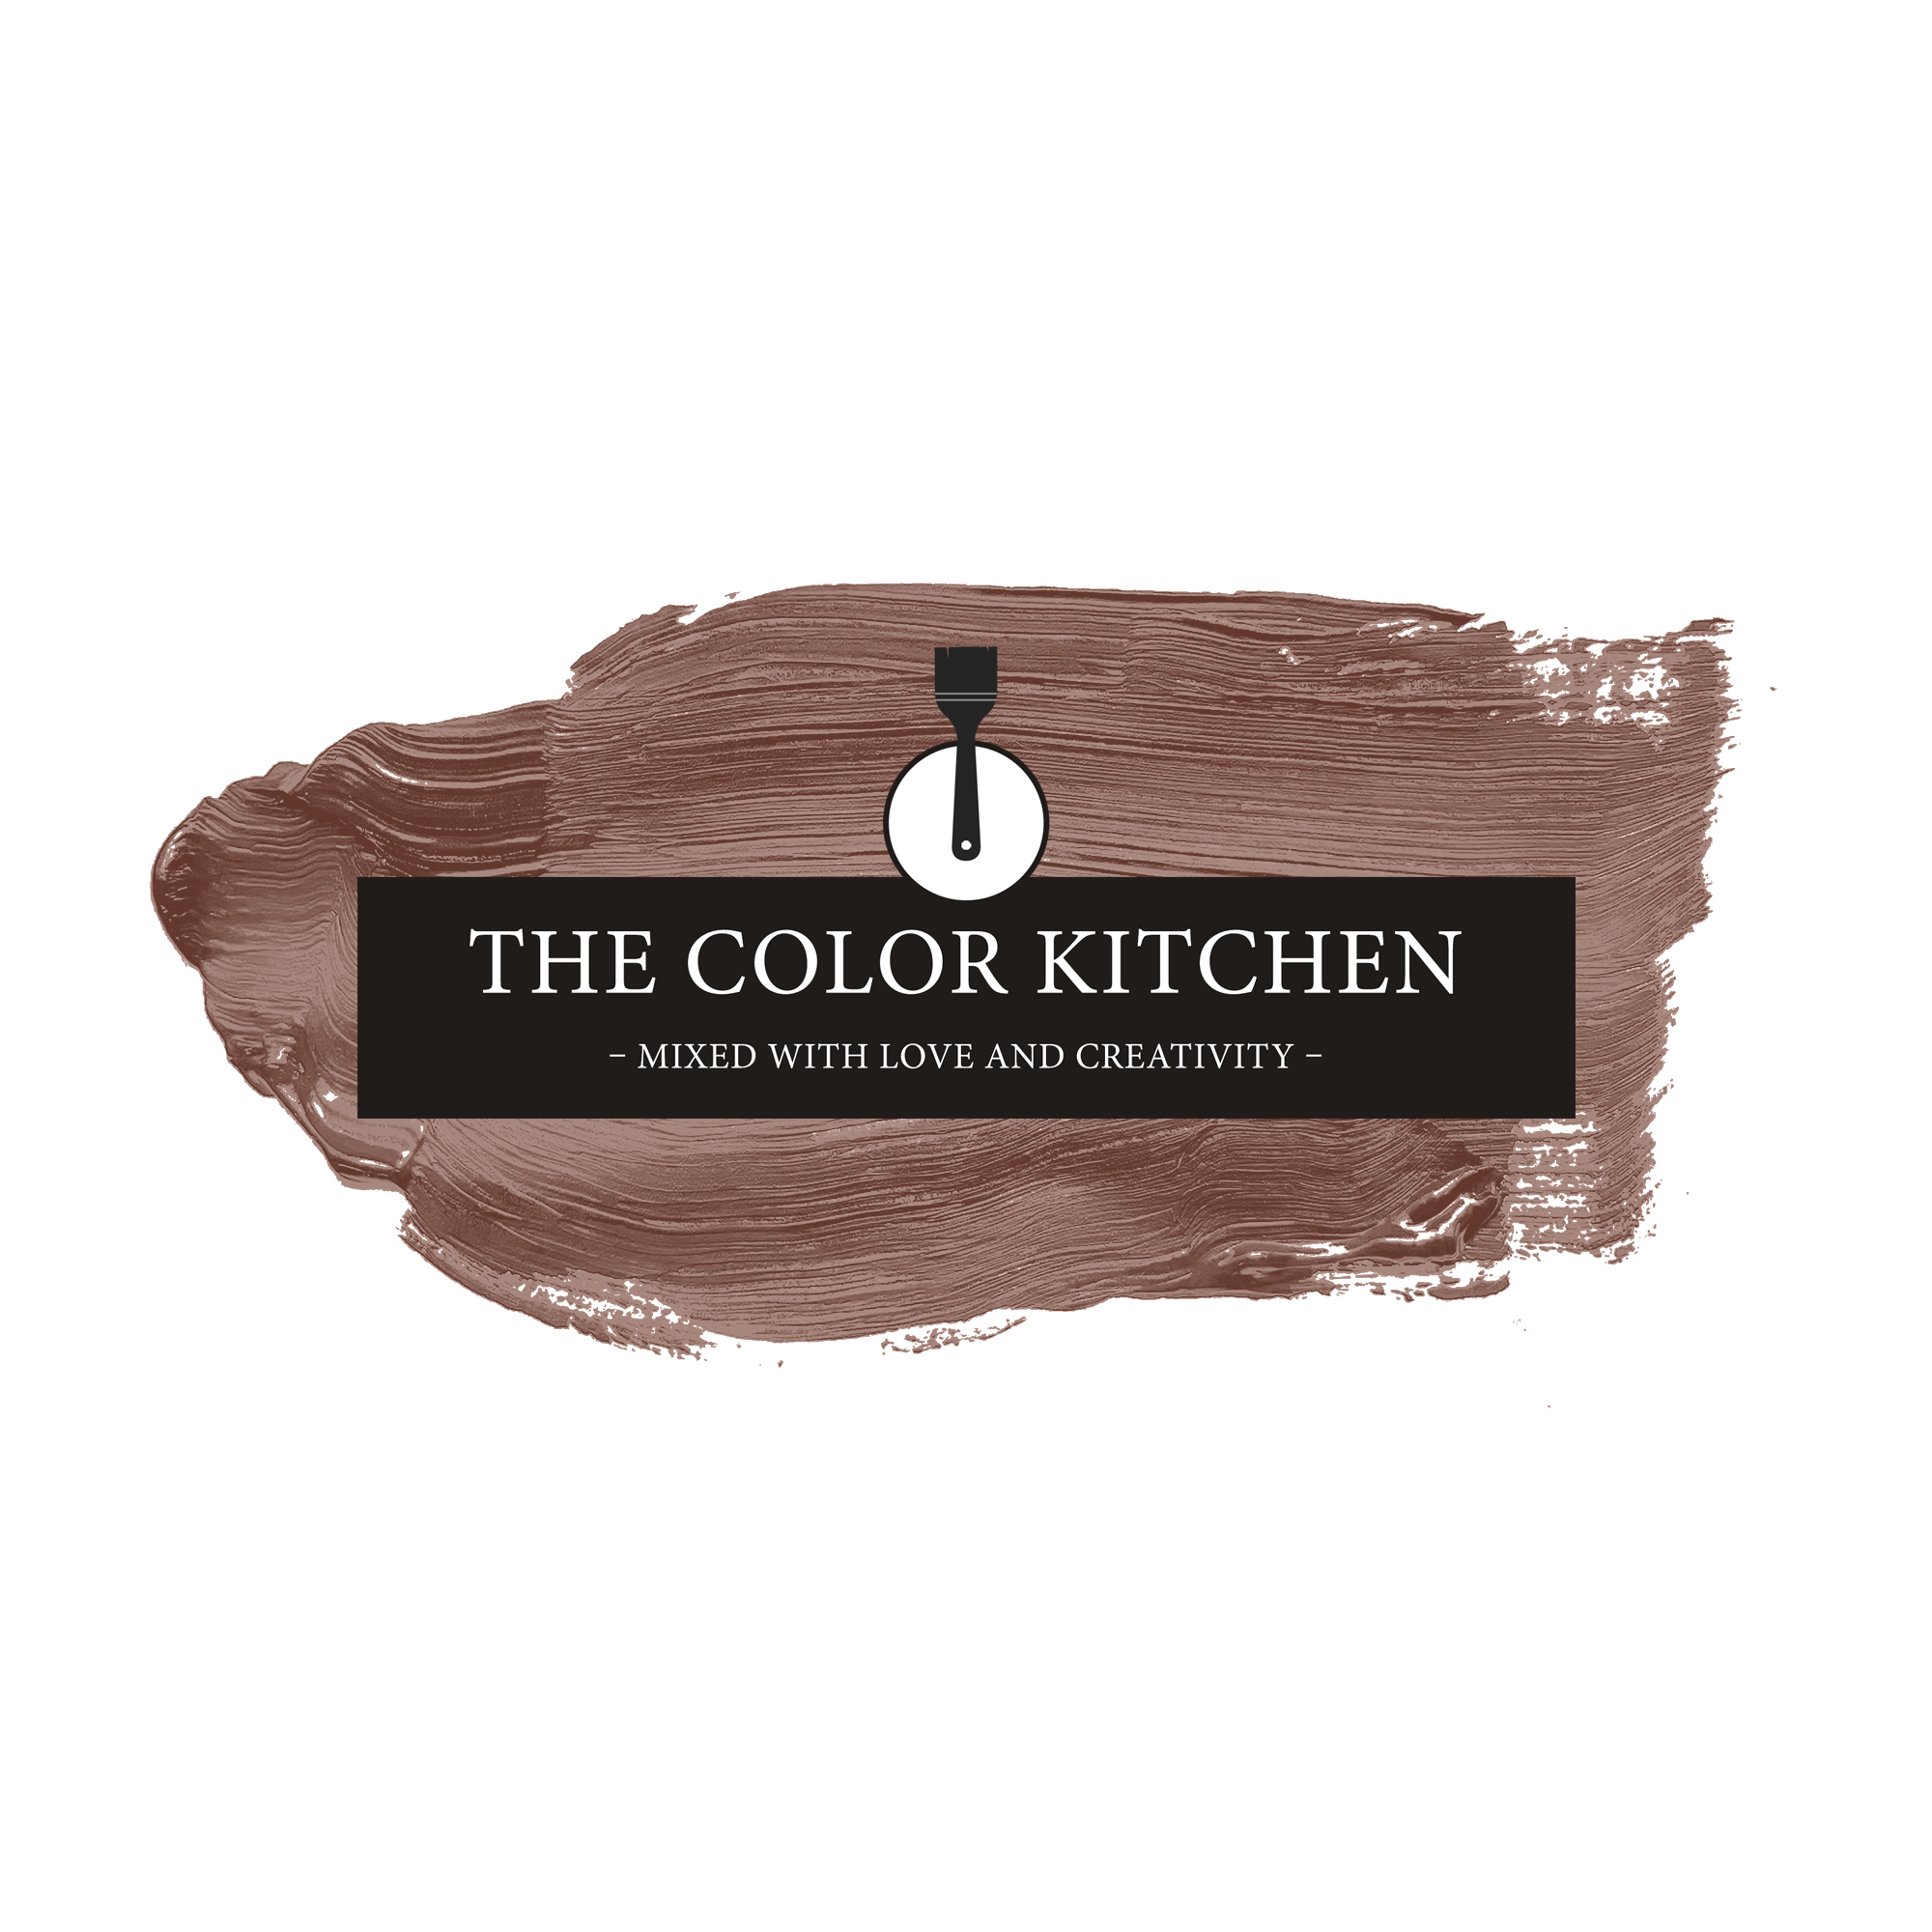 The Color Kitchen Reddish Chestnut 2,5 l